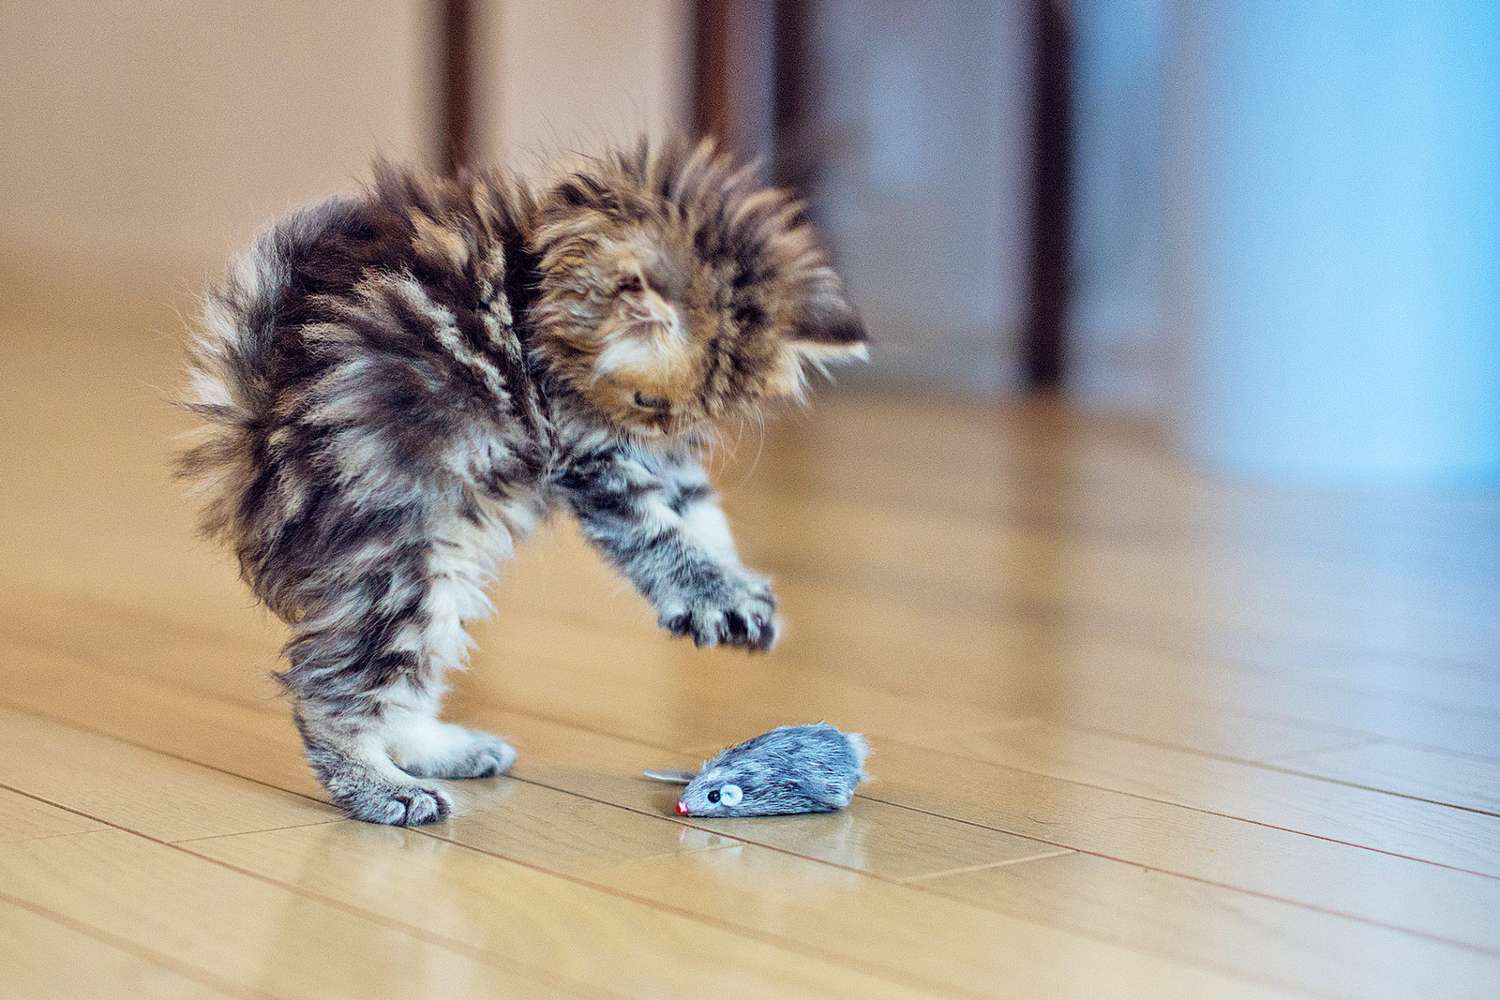 Fluffy kitten pounces on mouse toy on wood floor